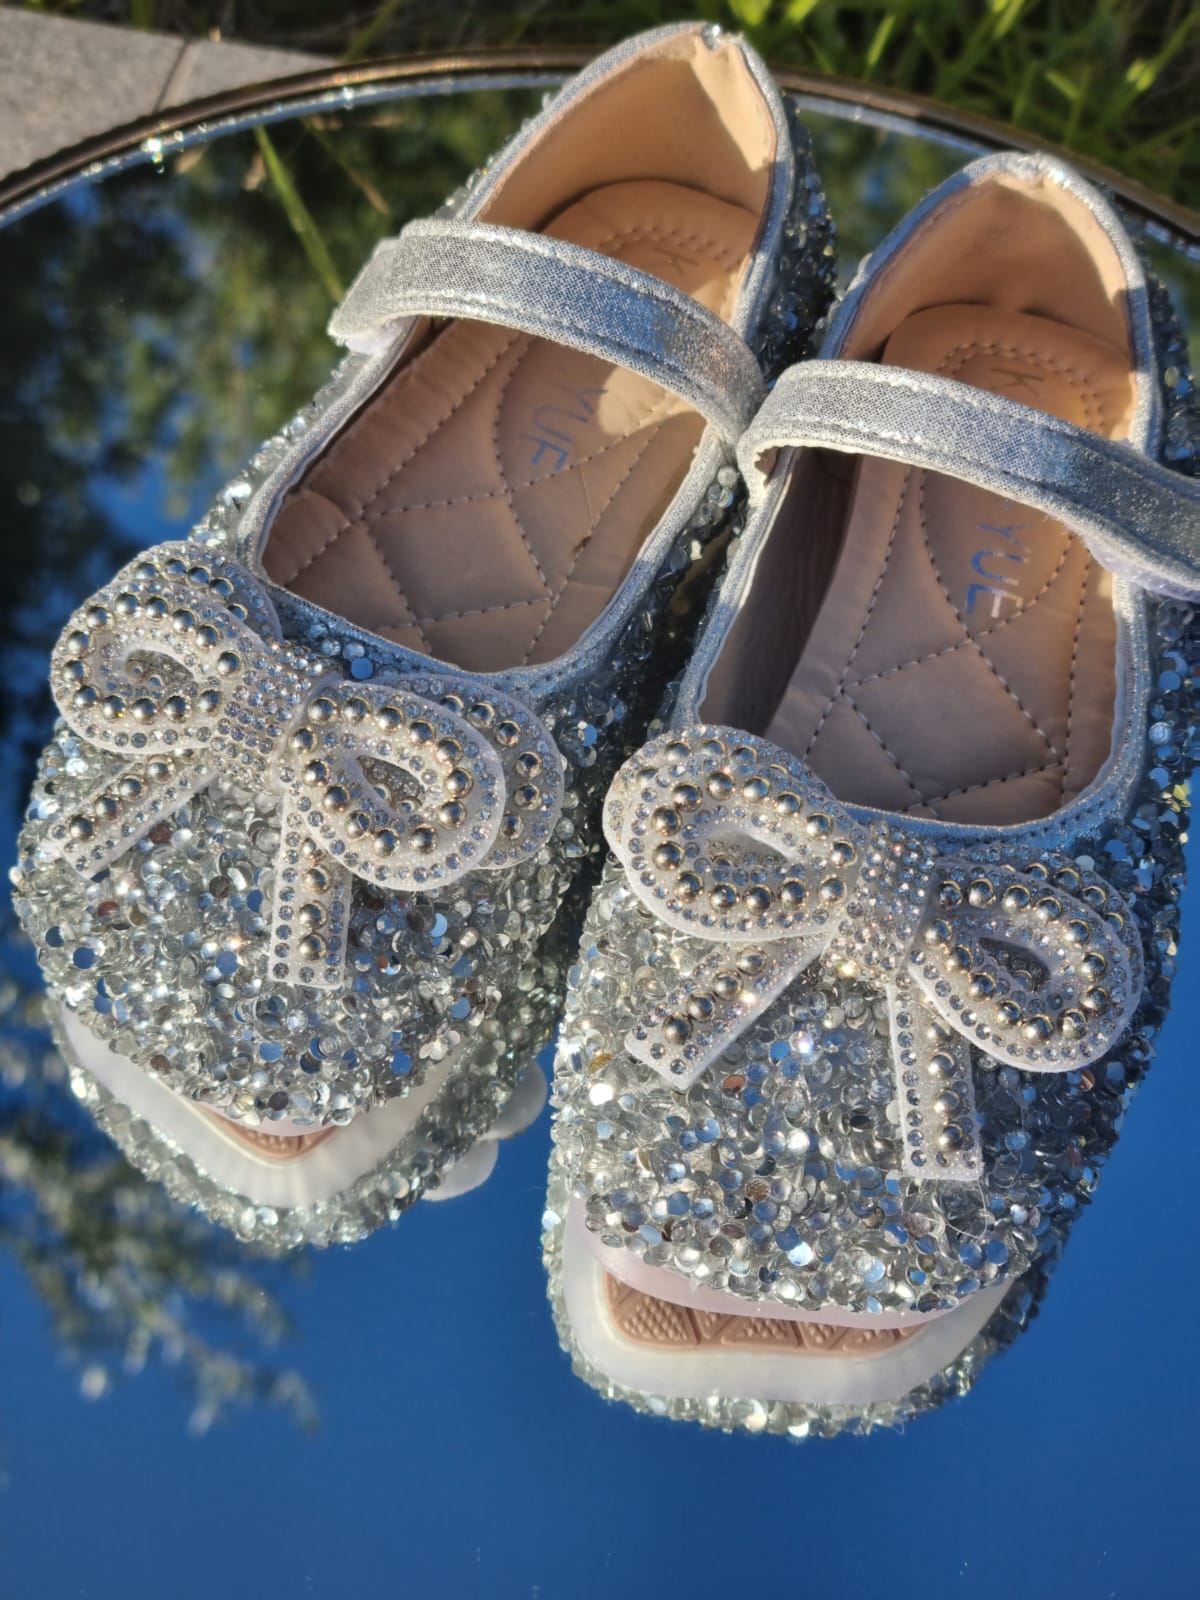 Silver Sparkly Princess Shoes at Cococbee Shop 1